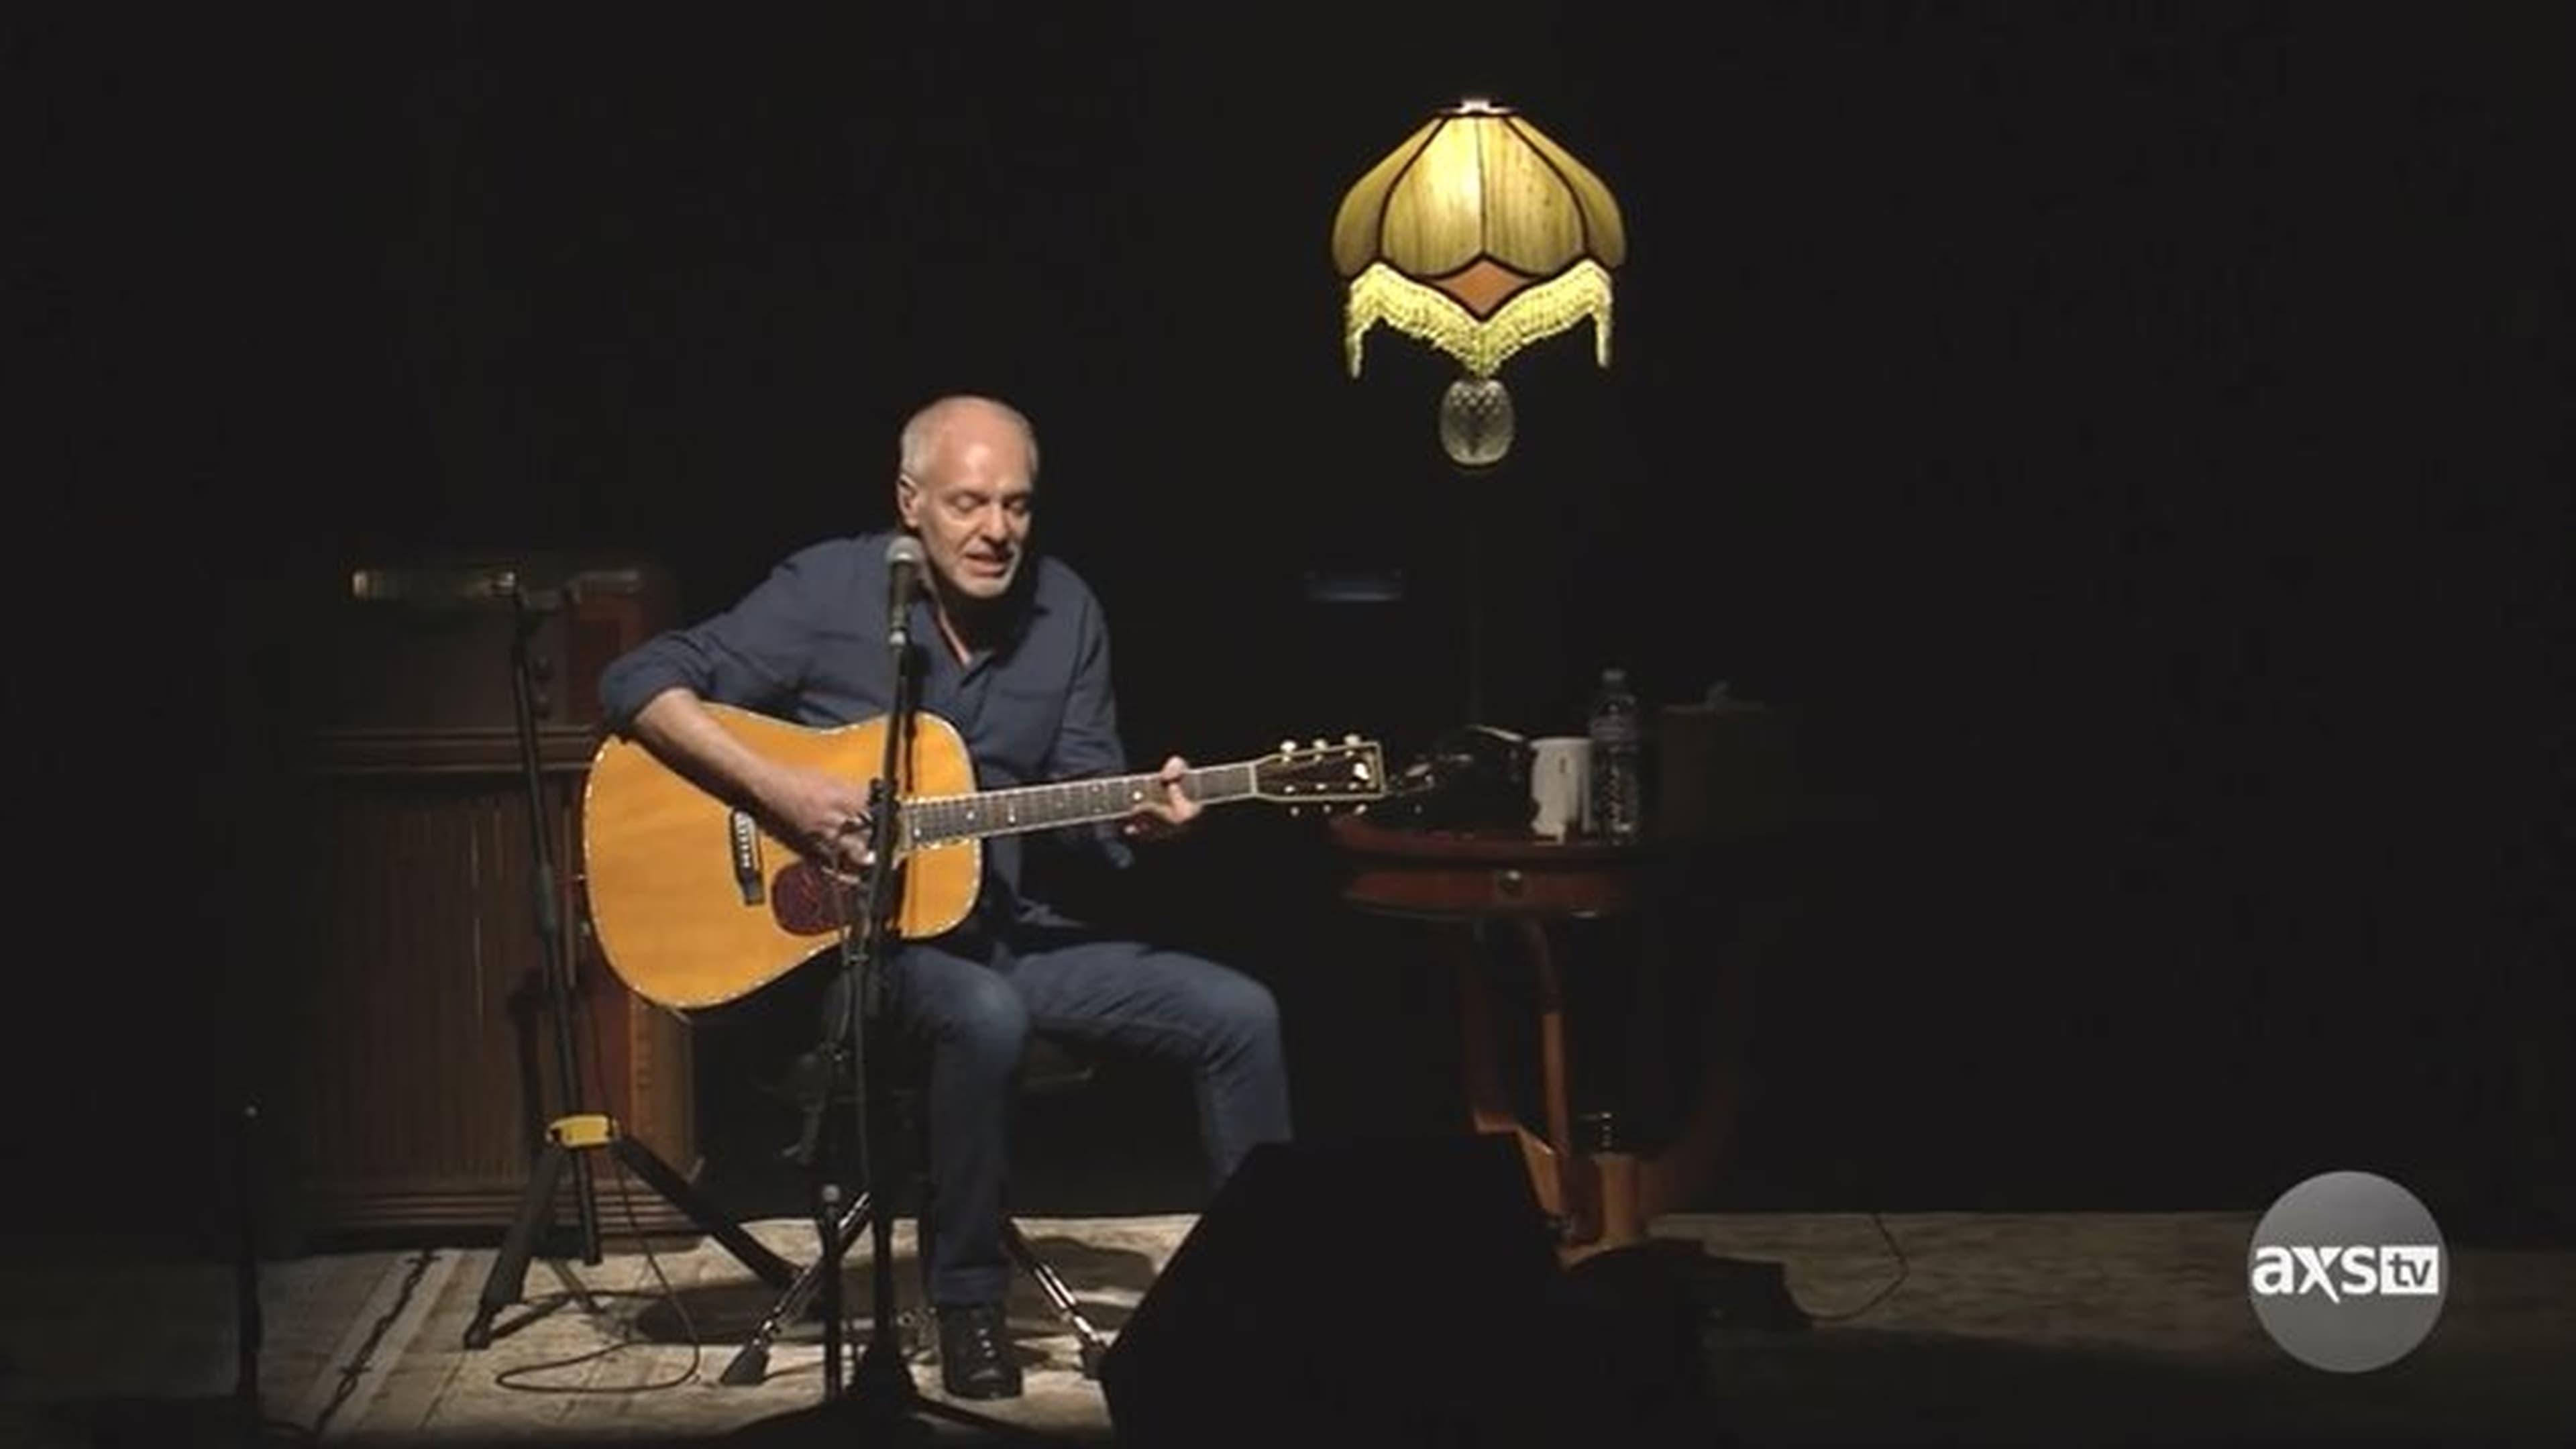 Peter Frampton Raw: An Acoustic Show backdrop